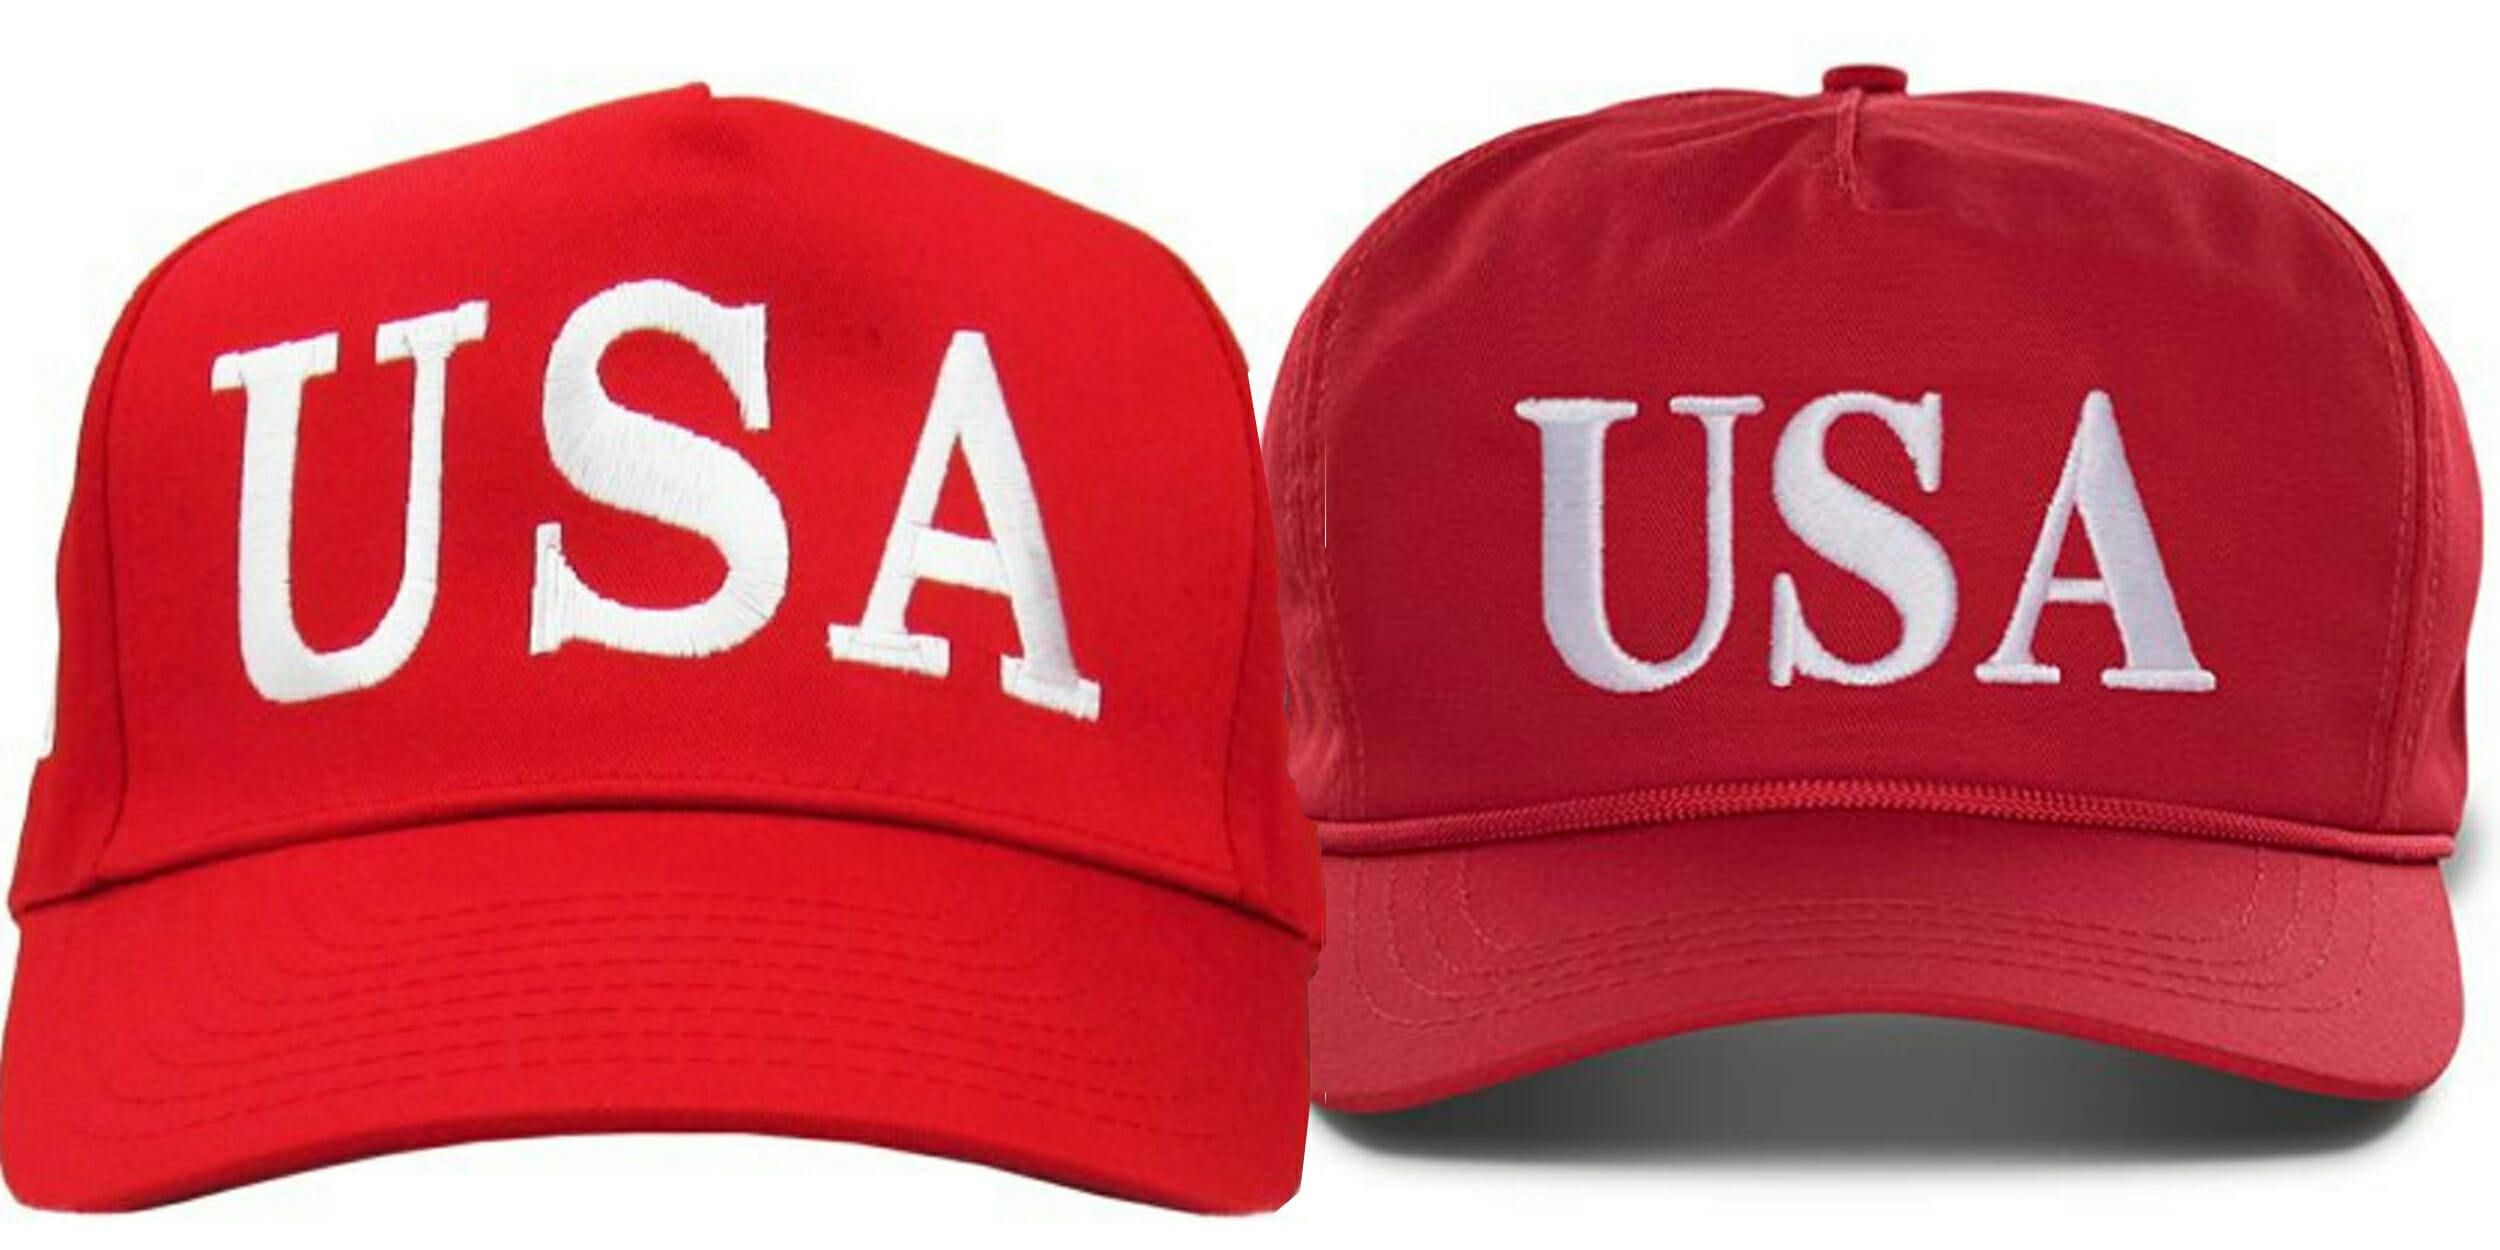 Walmart is selling knockoff Trump 'USA' hats.